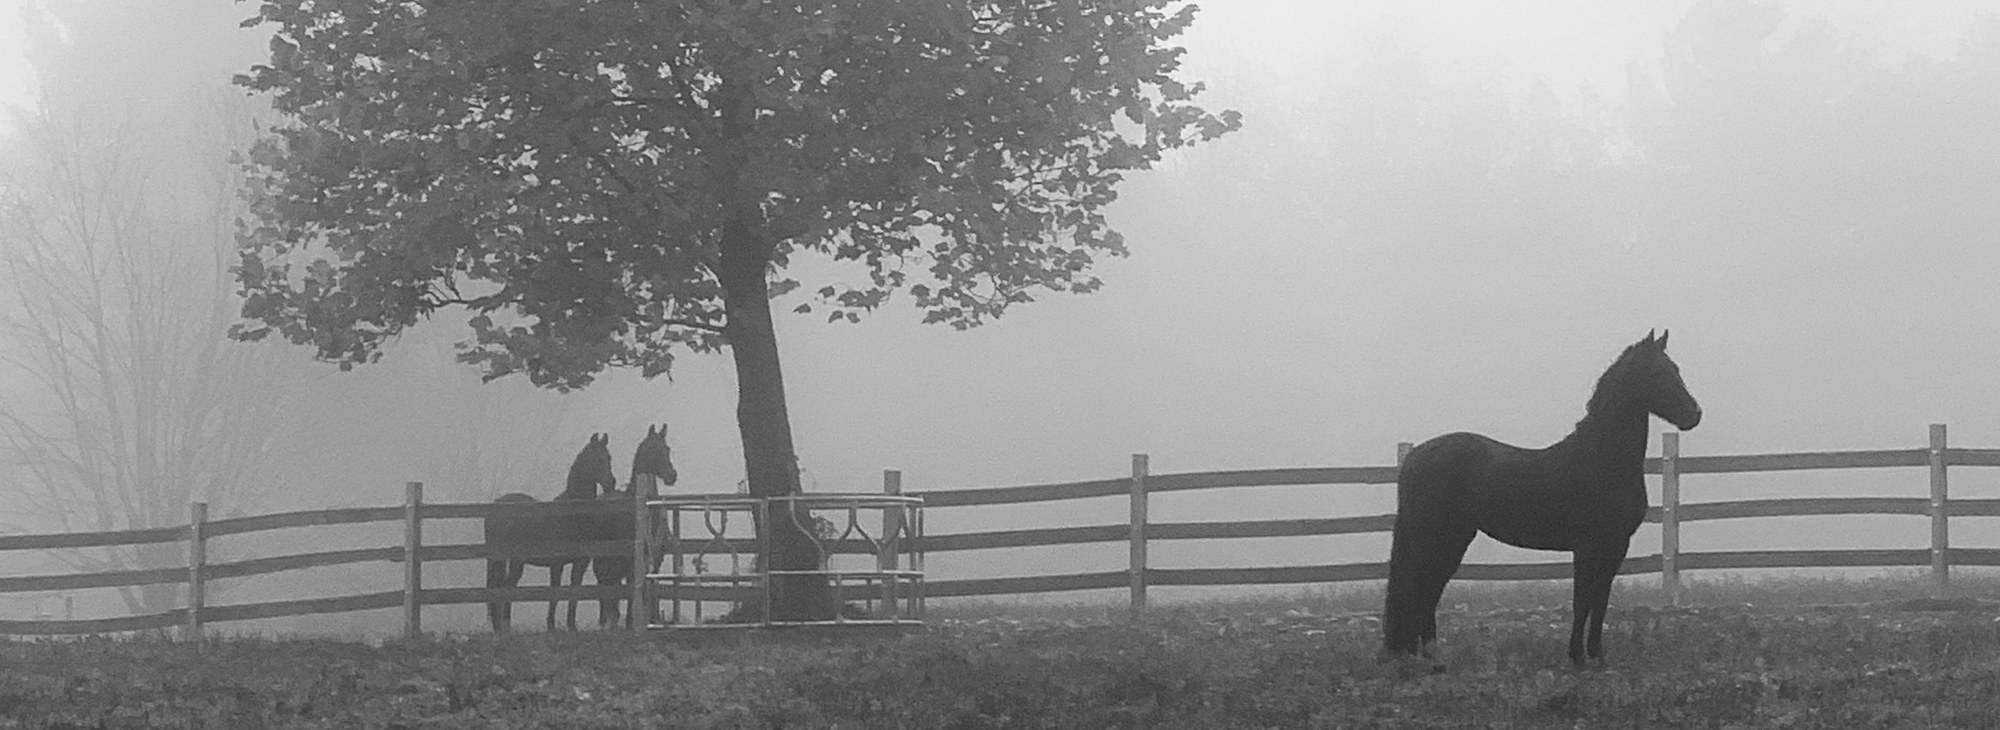 Morgan standing in a foggy field